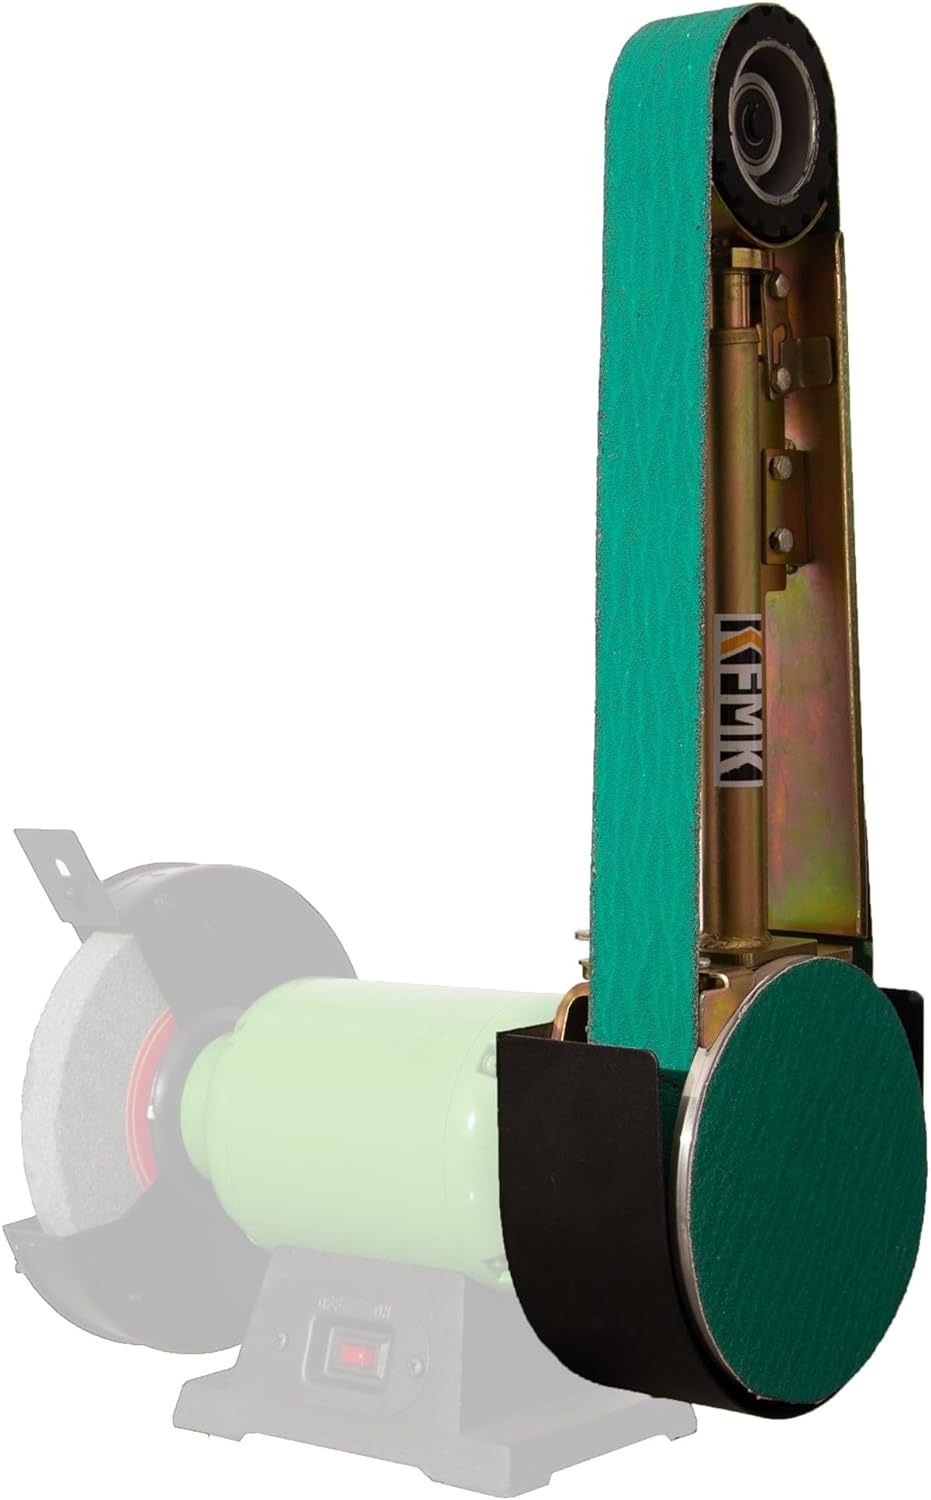 KFMK 2x48 Belt Grinder Attachment for Bench Grinders, 2x48 Inch Belt and 7 Inch Disc Sander Attachment for Bench Grinders